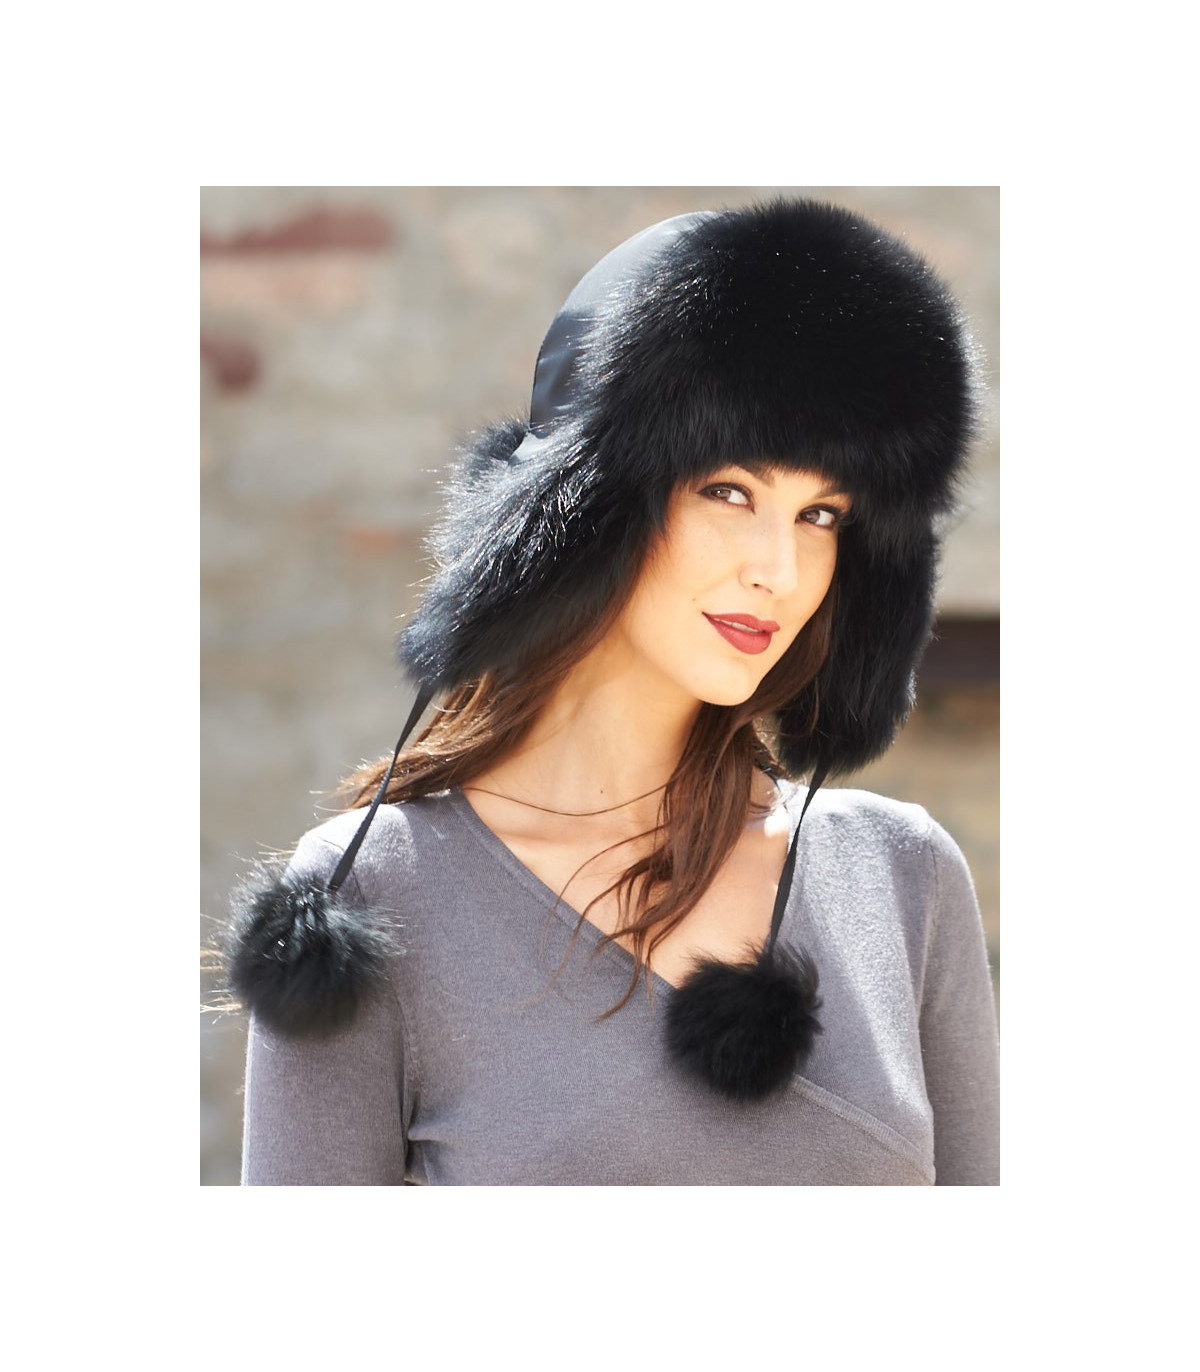 Womens Black Fox Fur Trapper Hat with Pom Poms at Fur Hat World